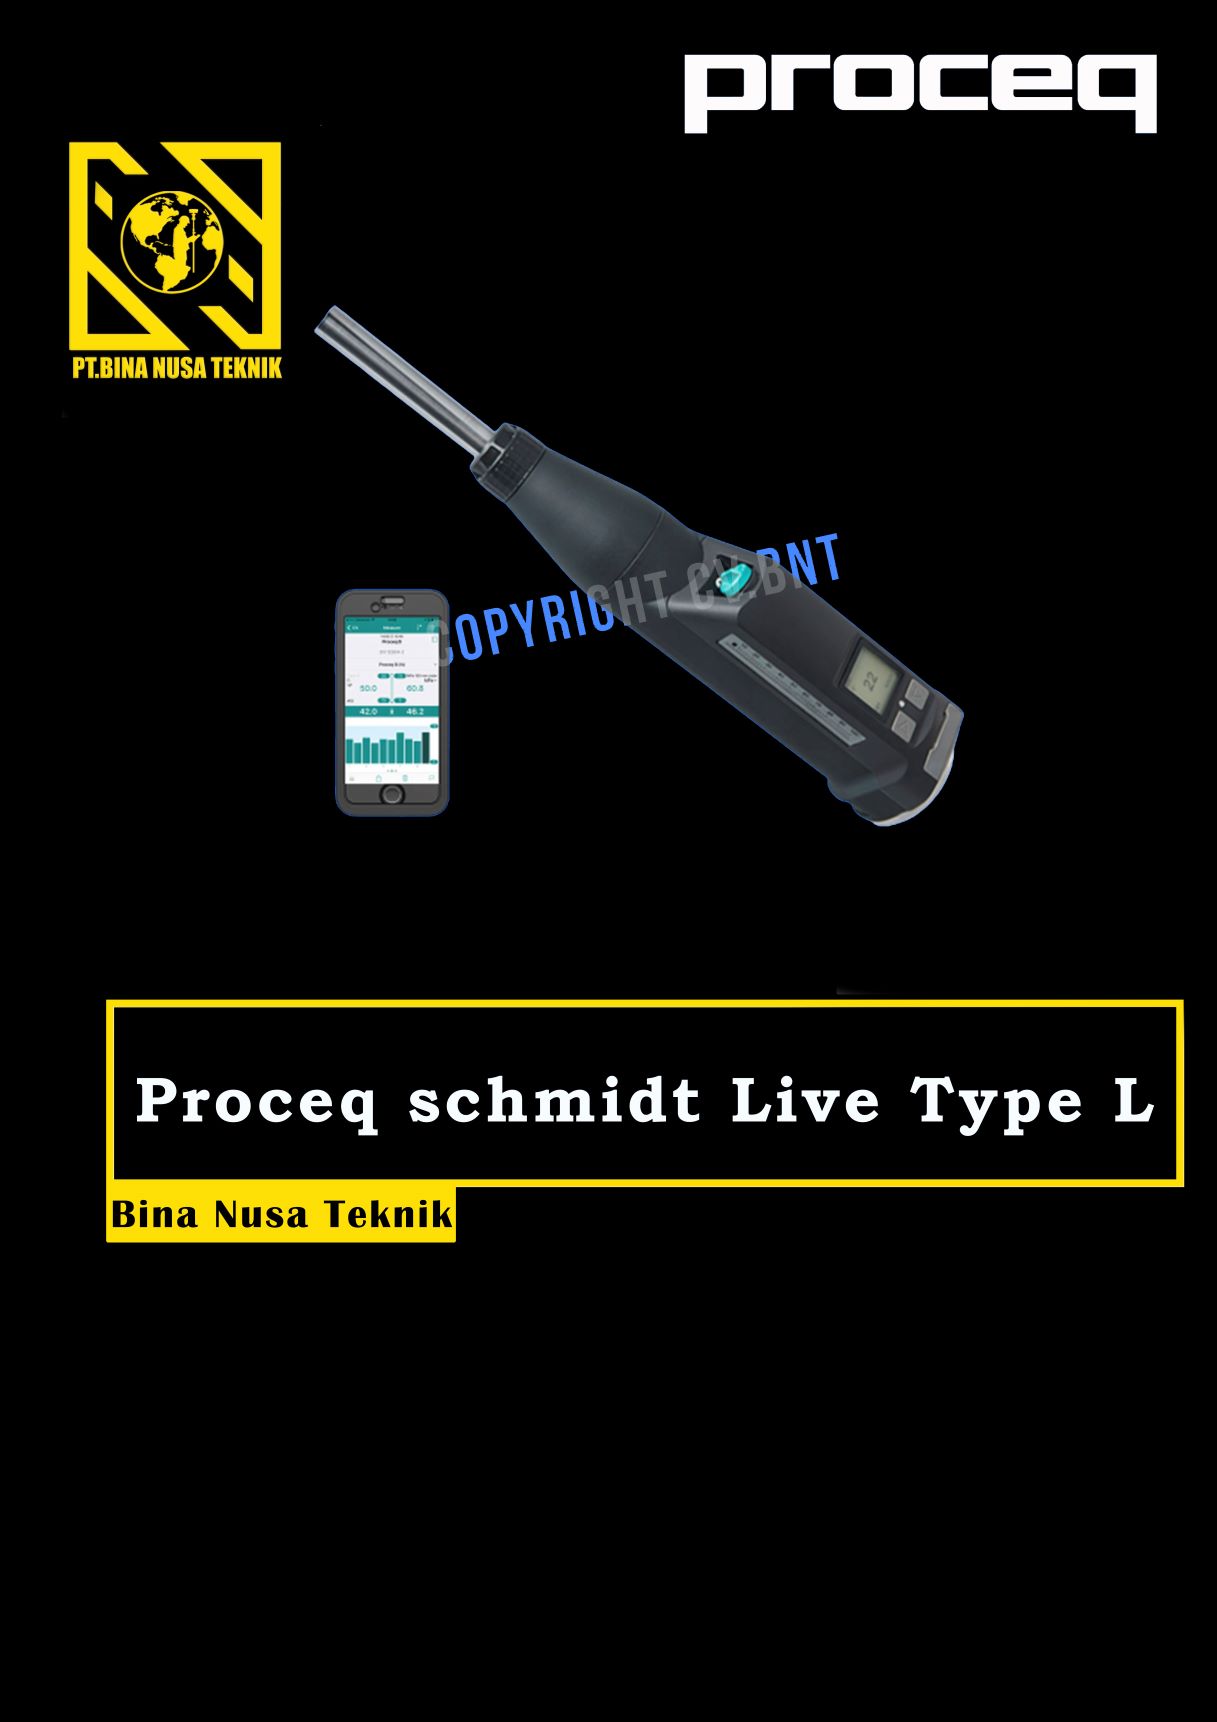 hammer test proceq original schmidt live type l